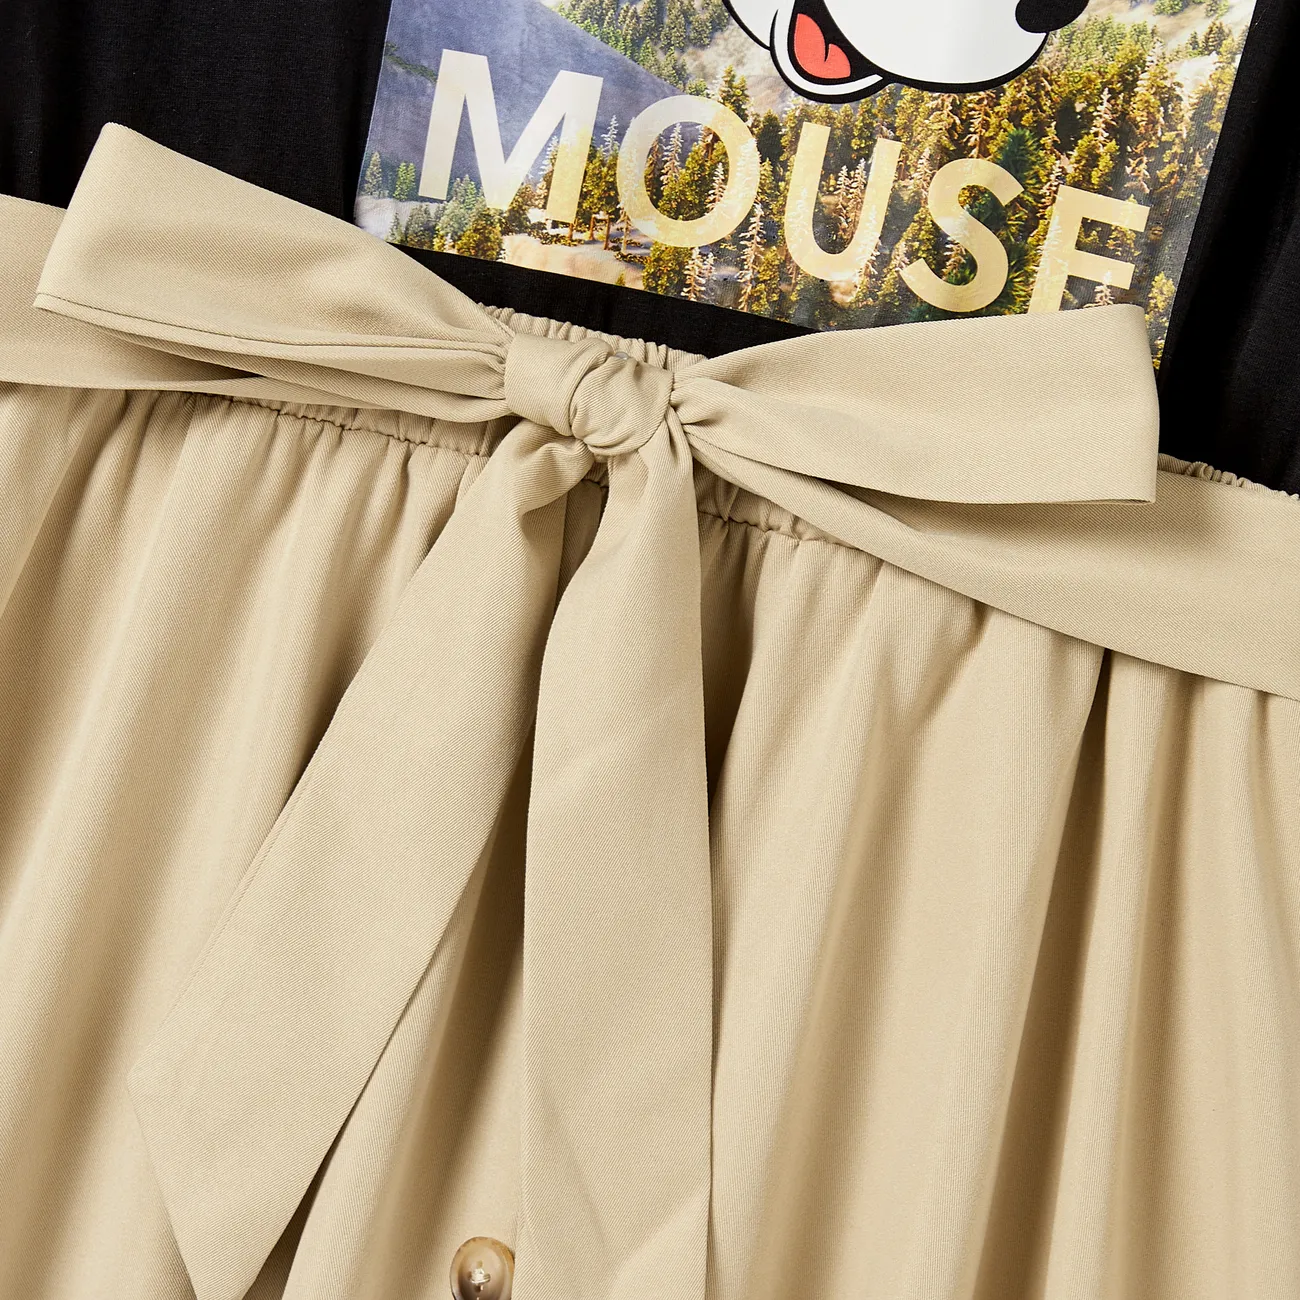 Disney Mickey and Friends Family Matching Naia™ Character Print Bowknot Cotton T-shirt/Dress/Short-sleeve Romper Black big image 1